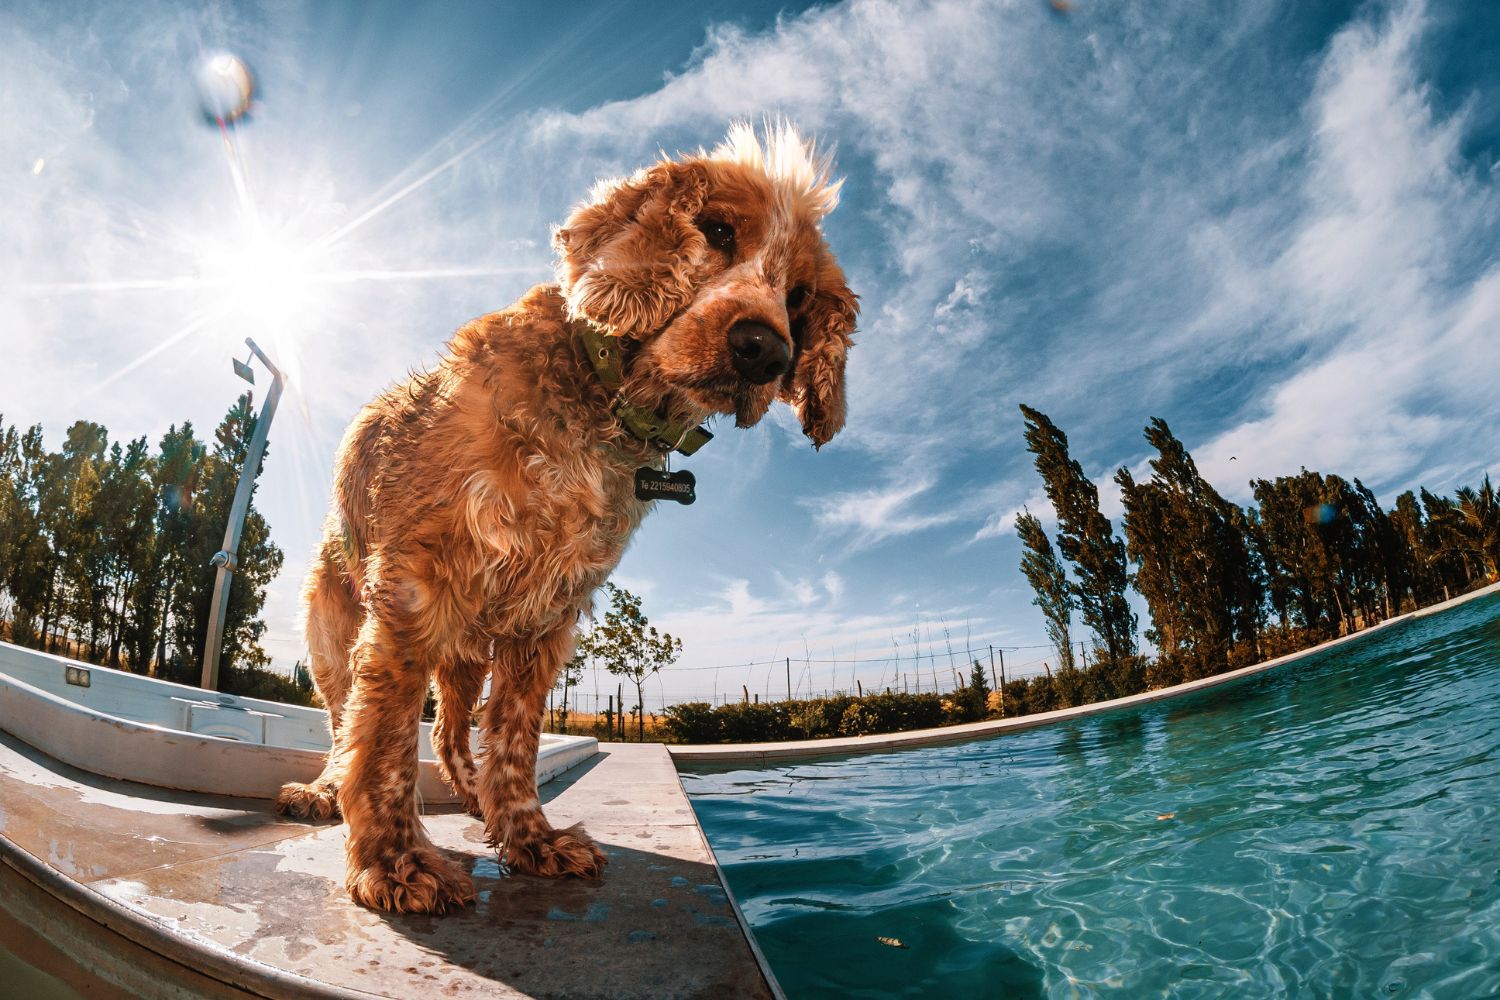 a dog's photo by fisheye lens